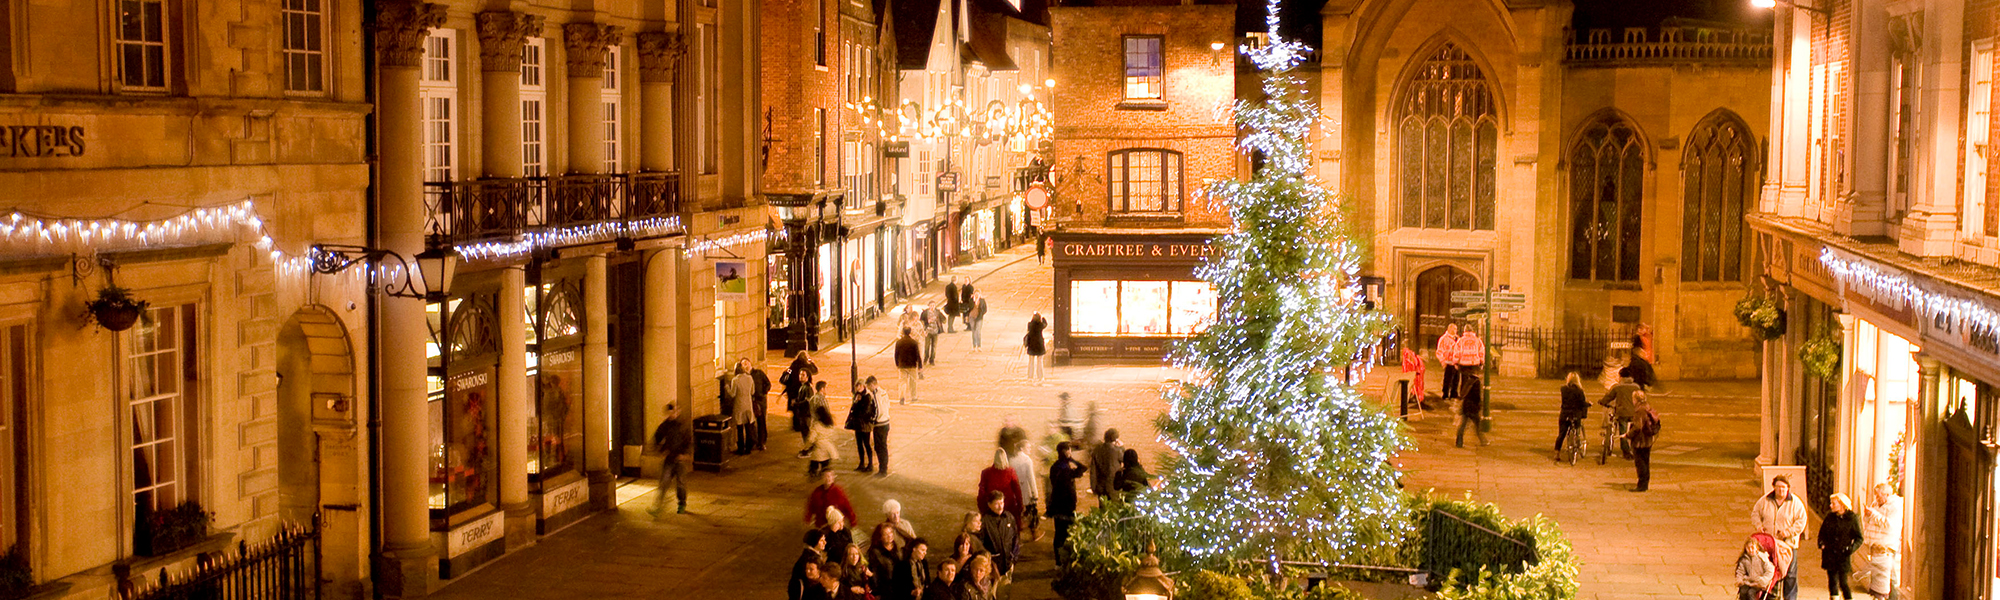 tourhub | Just Go Holidays | Historic York & Skipton at Christmastime 